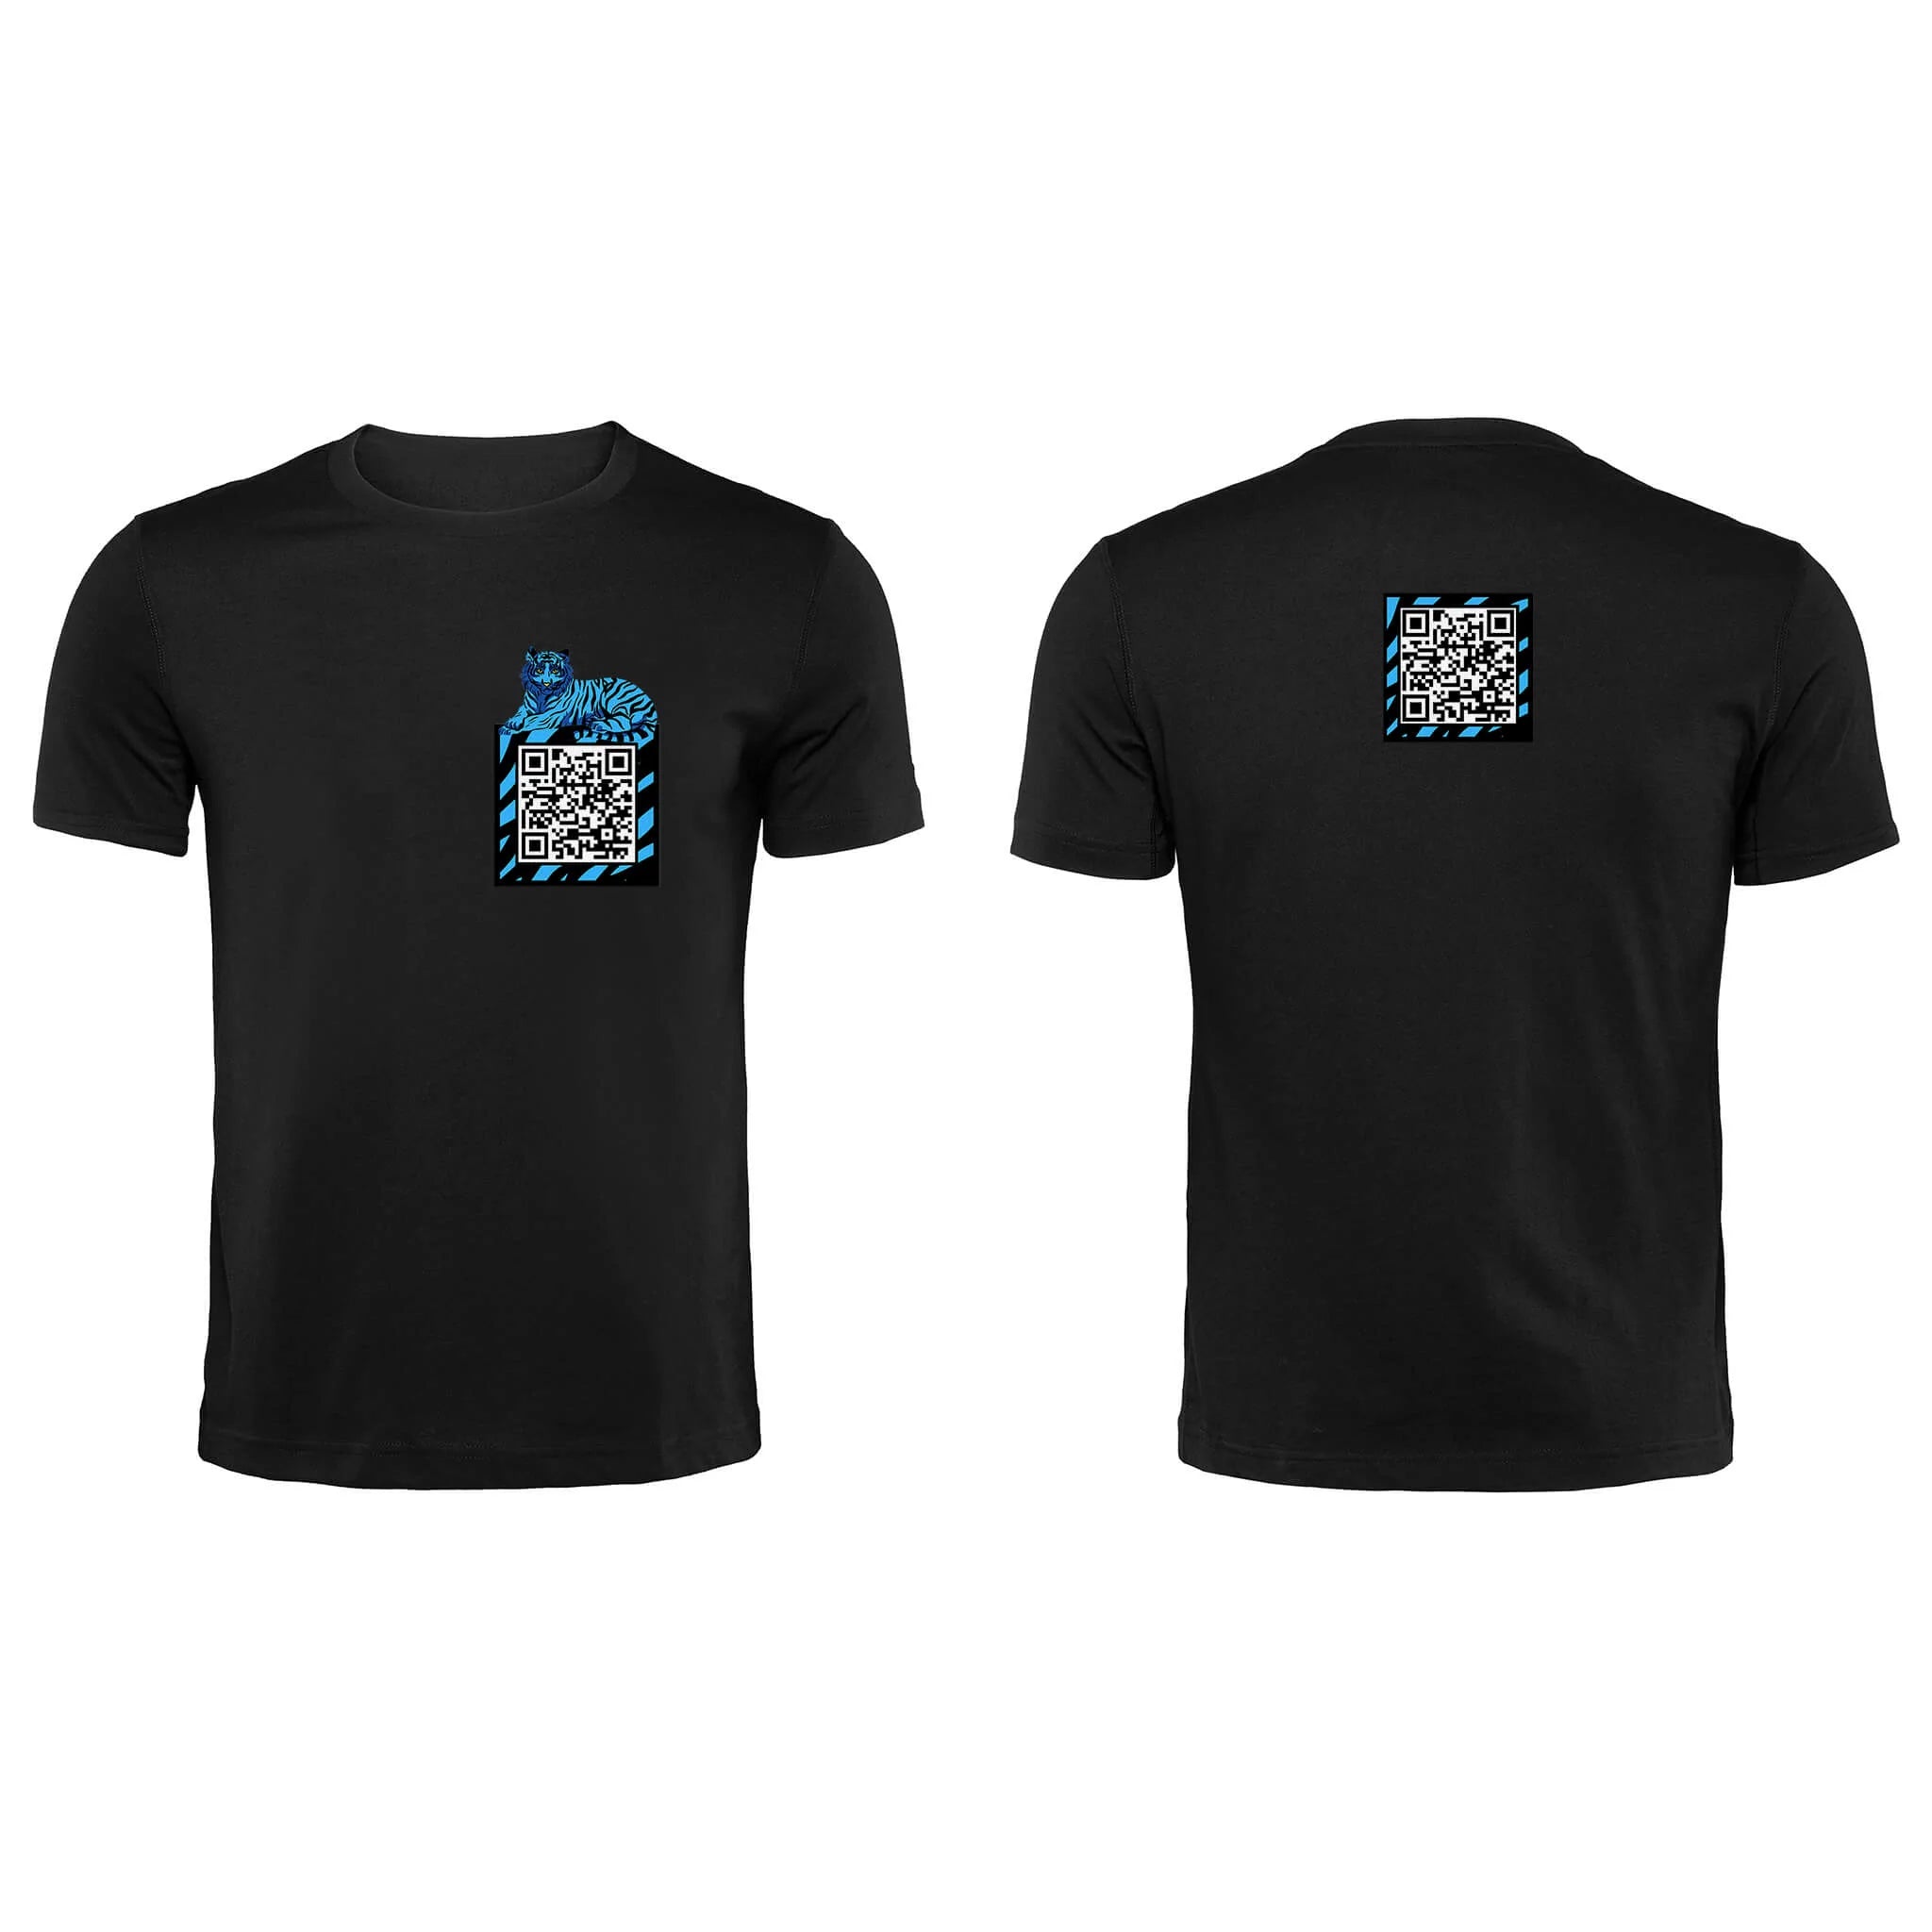 Black QR T-Shirt from RESHRD Savannah collection with Front & Back Black & Light Blue design